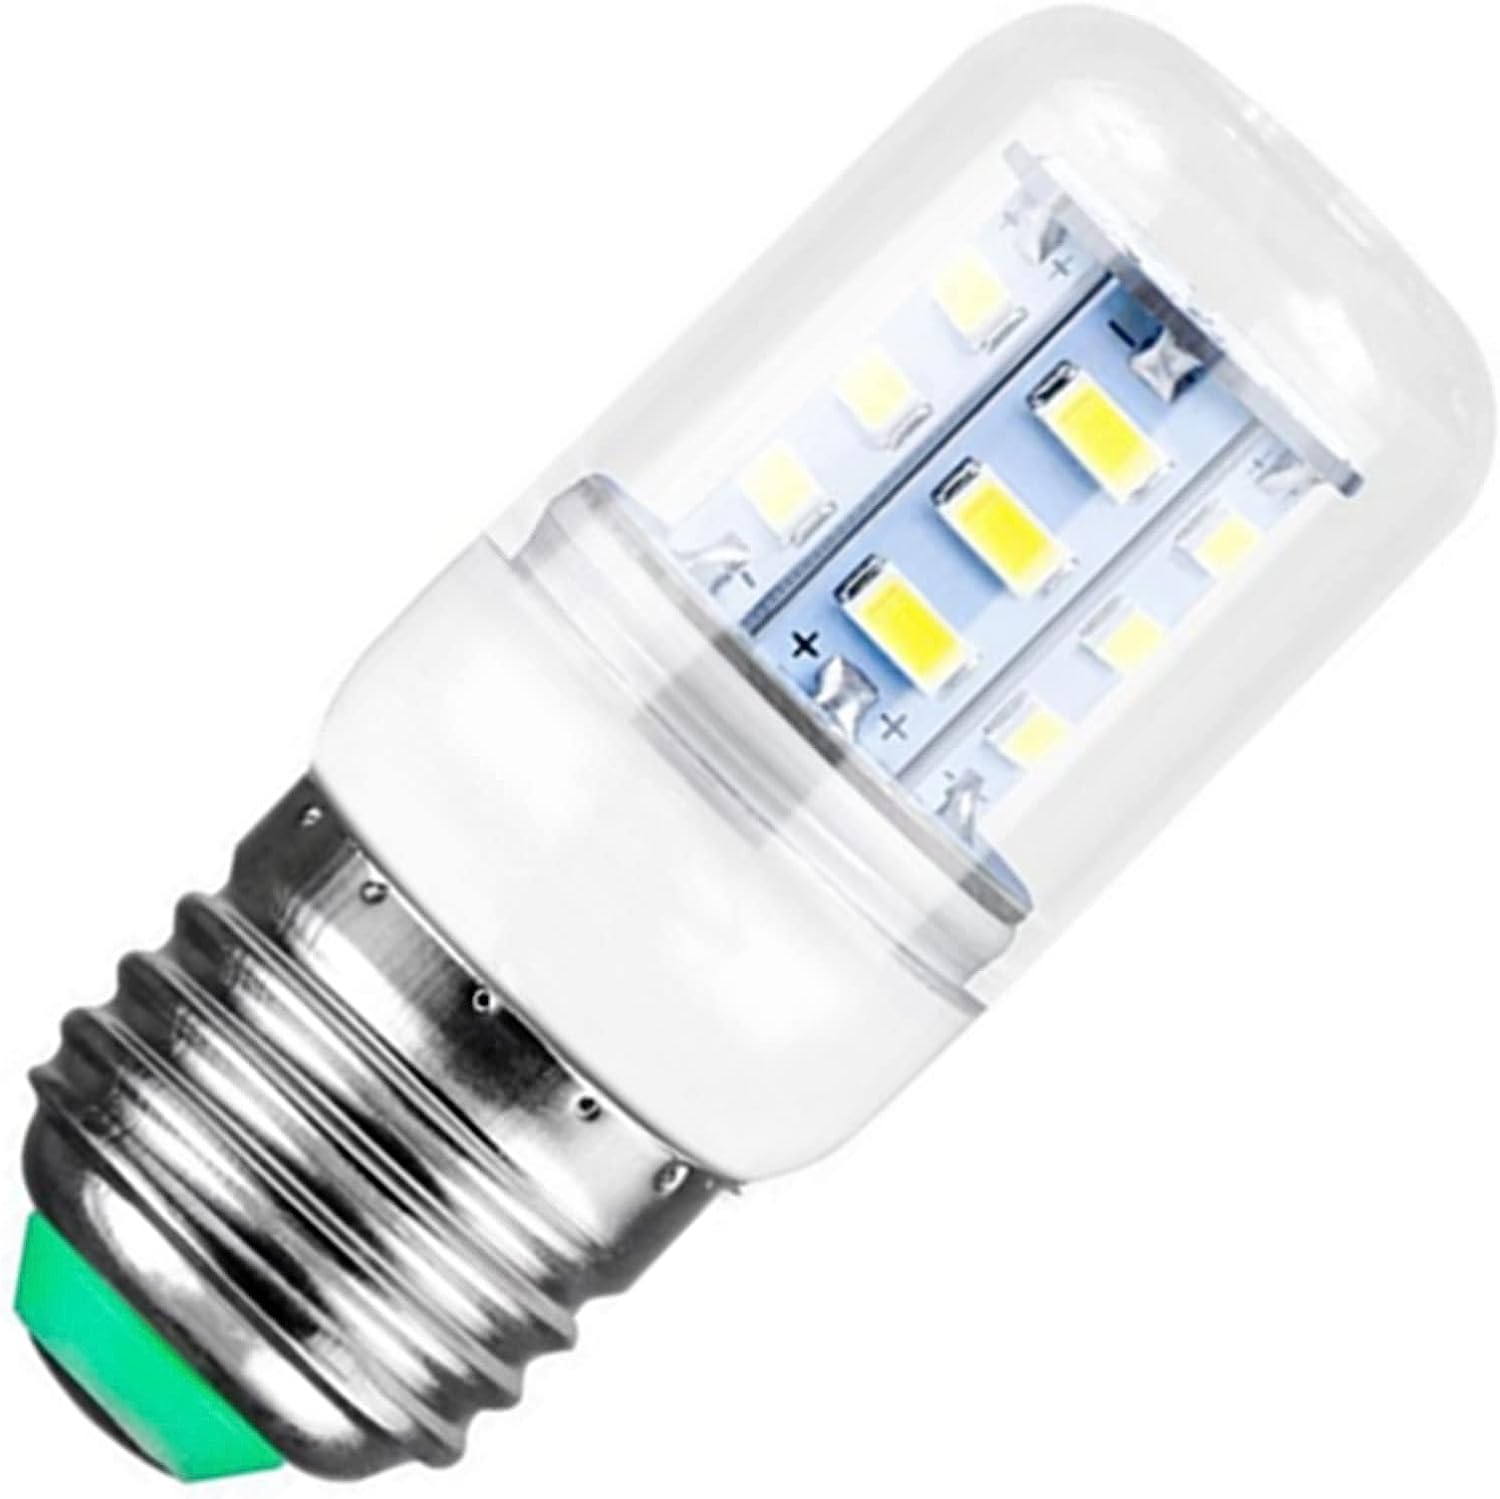  kzfuli 5304511738 LED Refrigerator Light Bulb